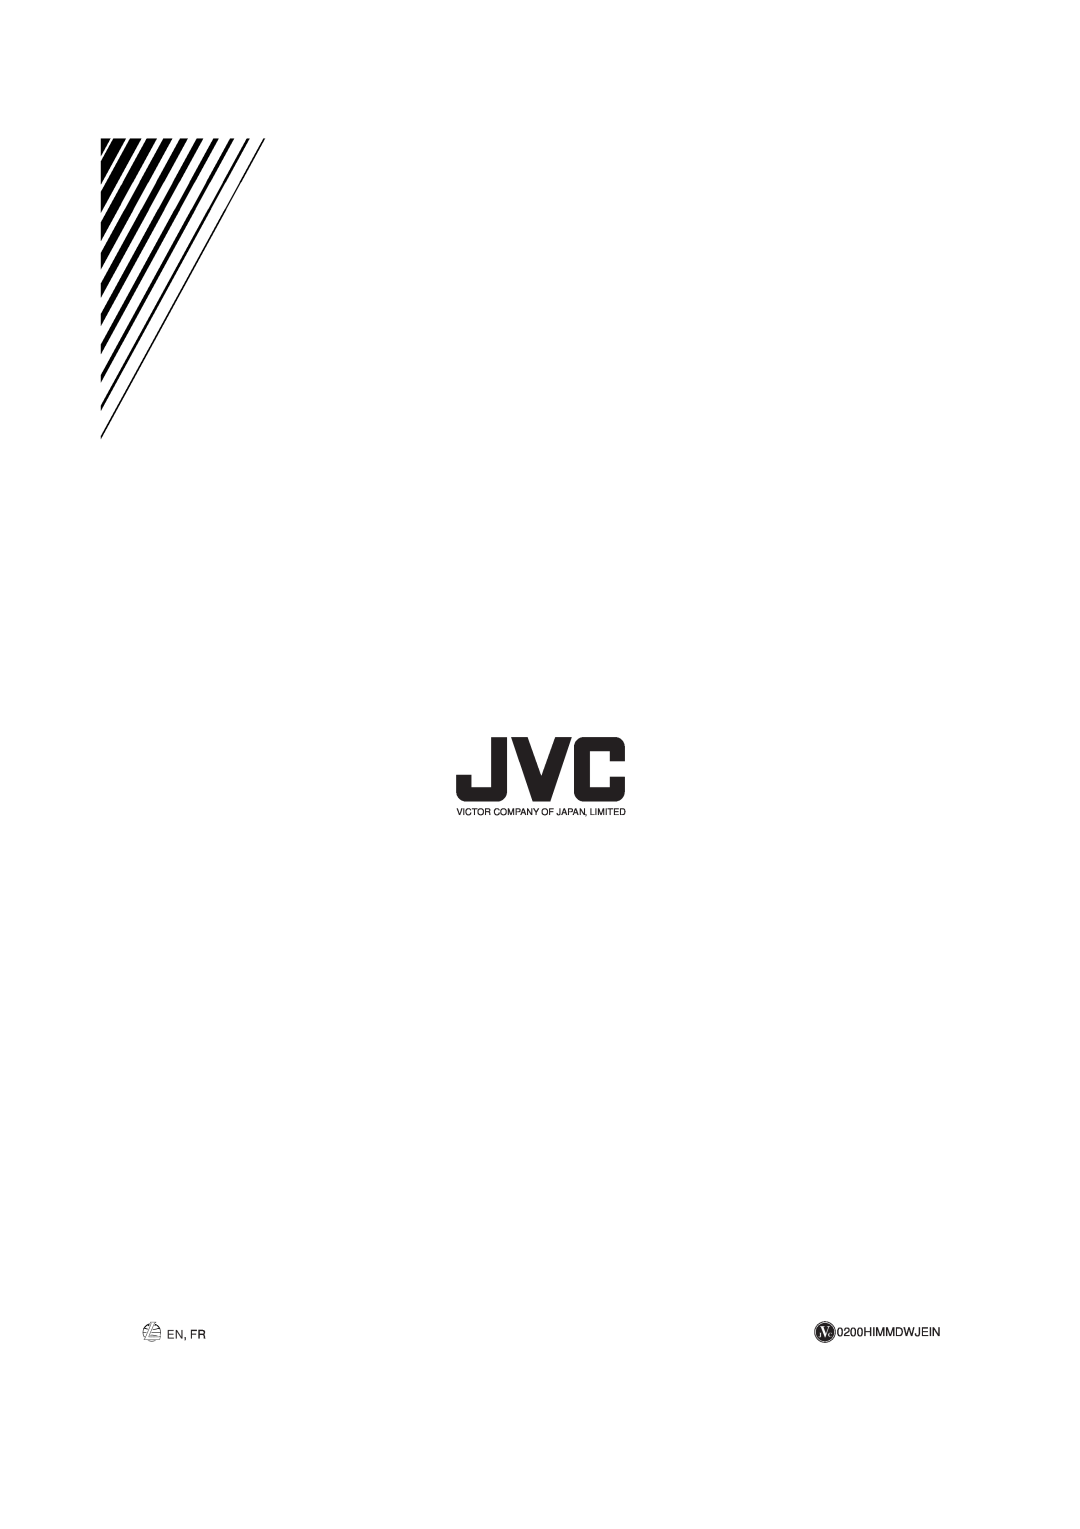 JVC RX-6100VBK manual En, Fr, J C 0200HIMMDWJEIN, Victor Company Of Japan, Limited 